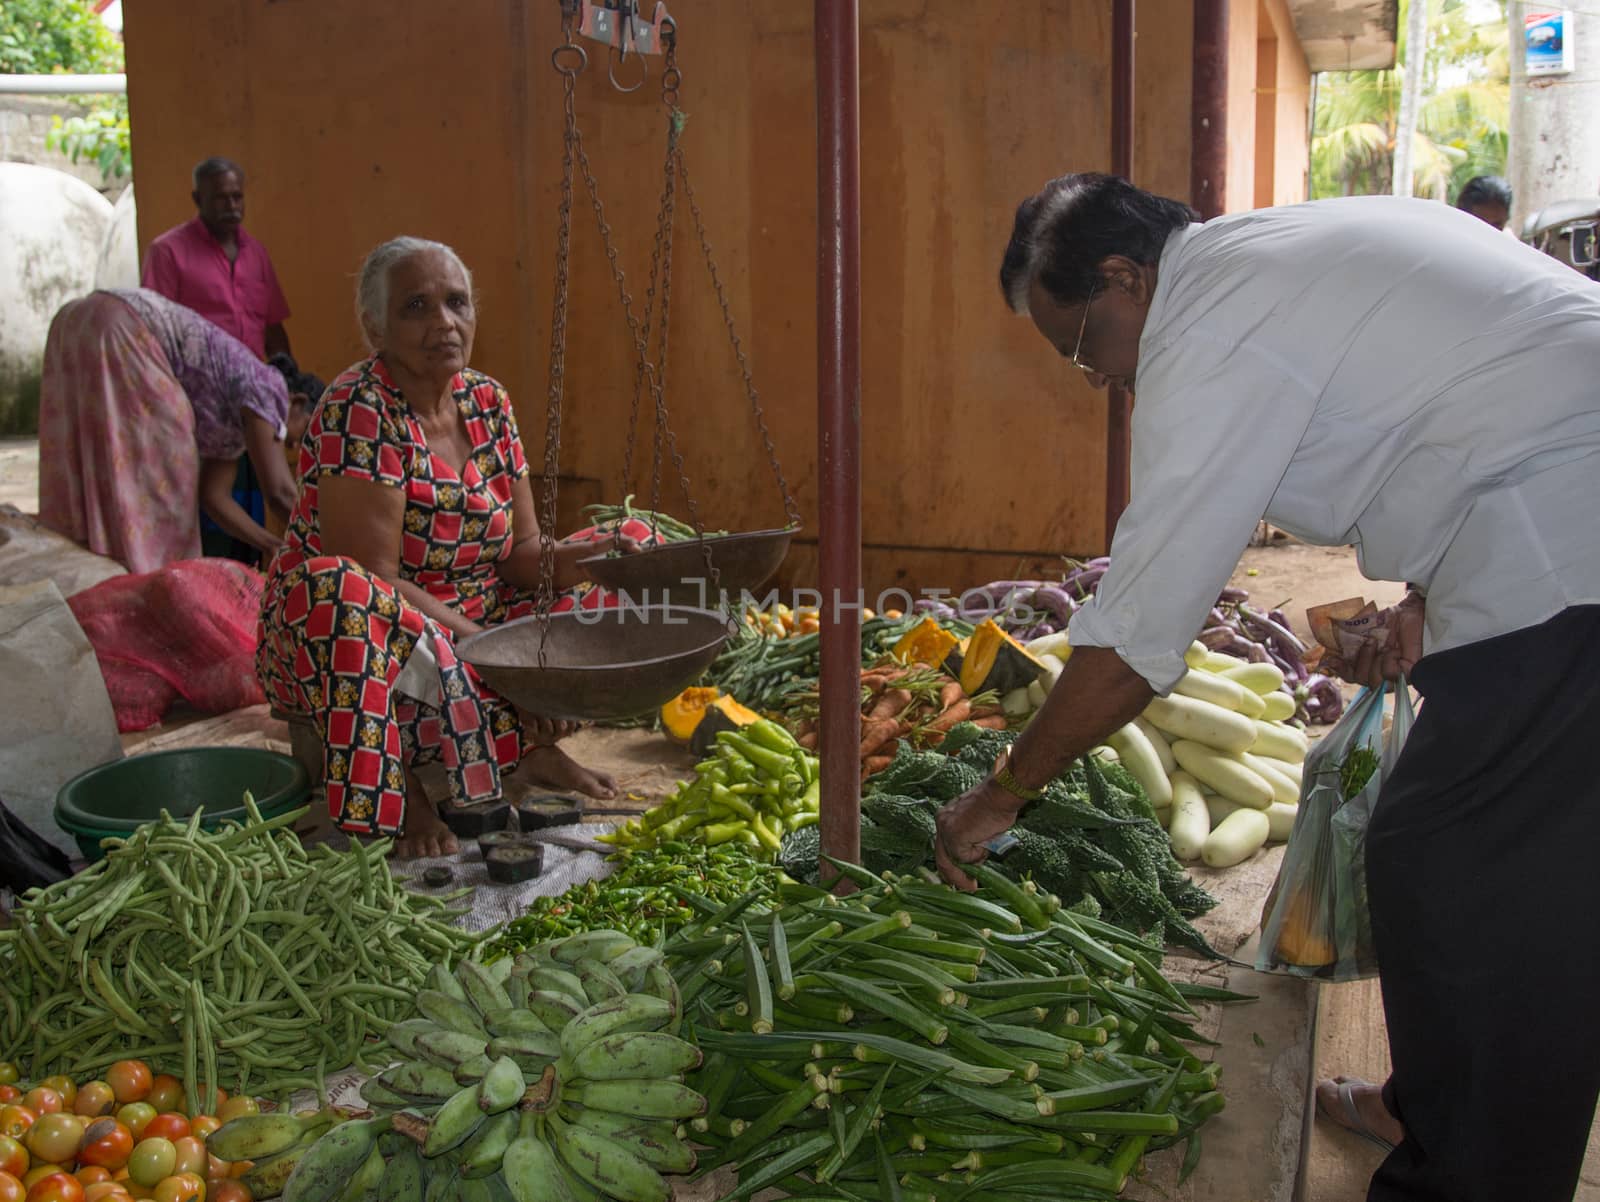 TANGALLE, SOUTHERN PROVINCE, SRI LANKA - DECEMBER 17, 2014: Vegetable vendor in the market on December 17, 2014 in Tangalle, Southern Province, Sri Lanka, Asia.